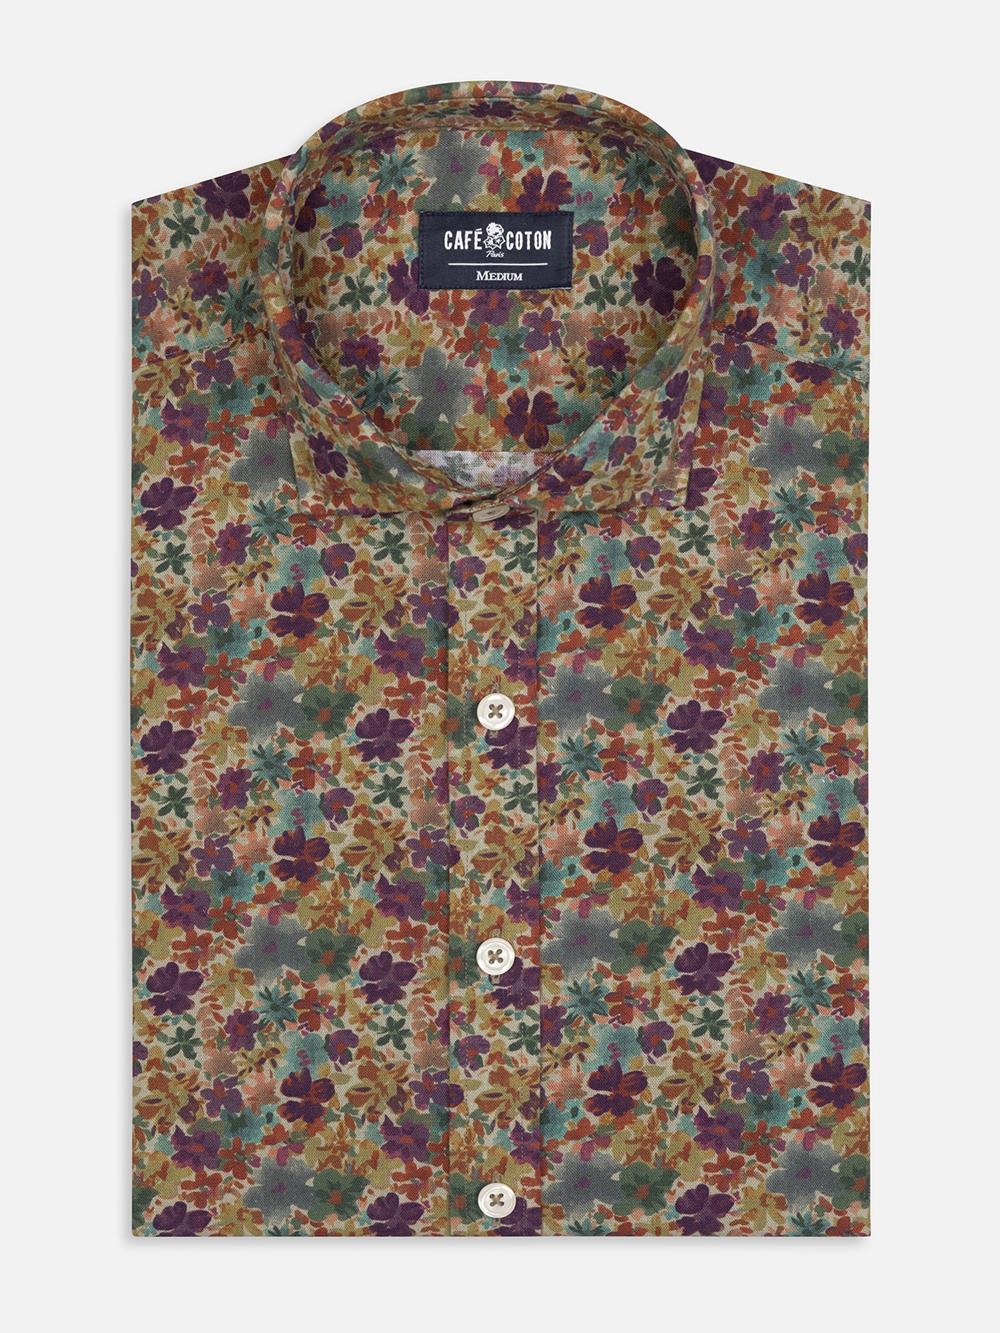 Stuart slim fit shirt in floral linen 